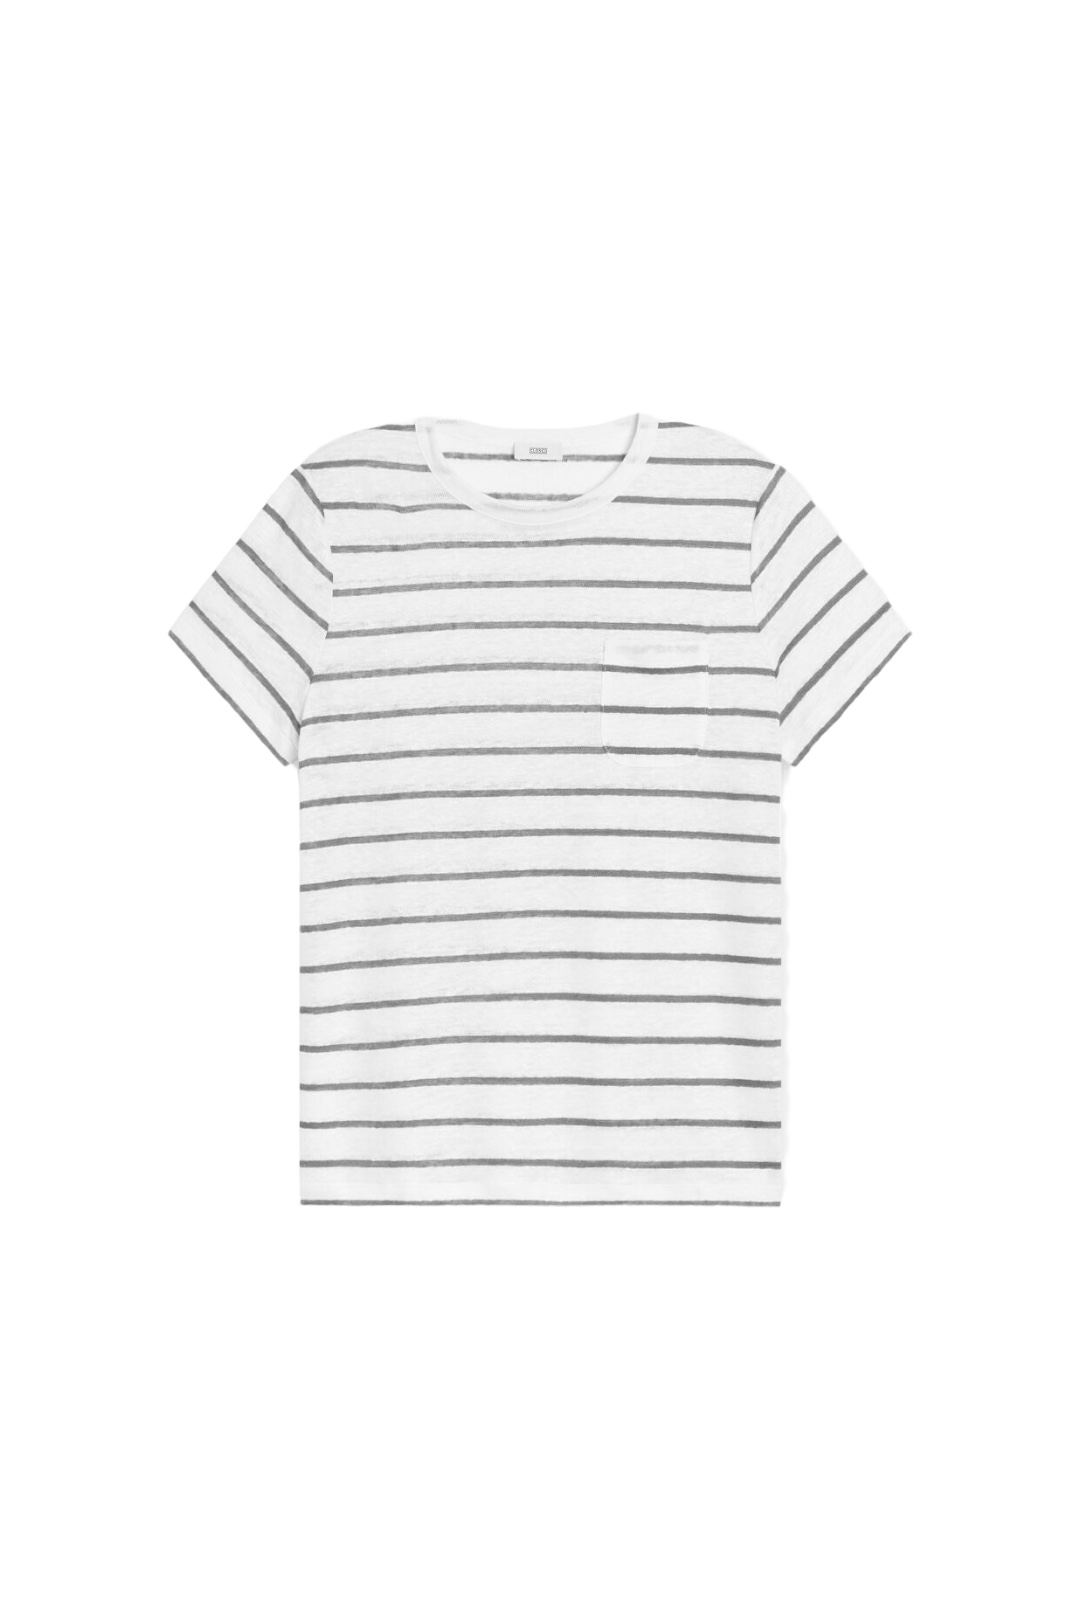 T-Shirt, gestreift, Closed, black & white